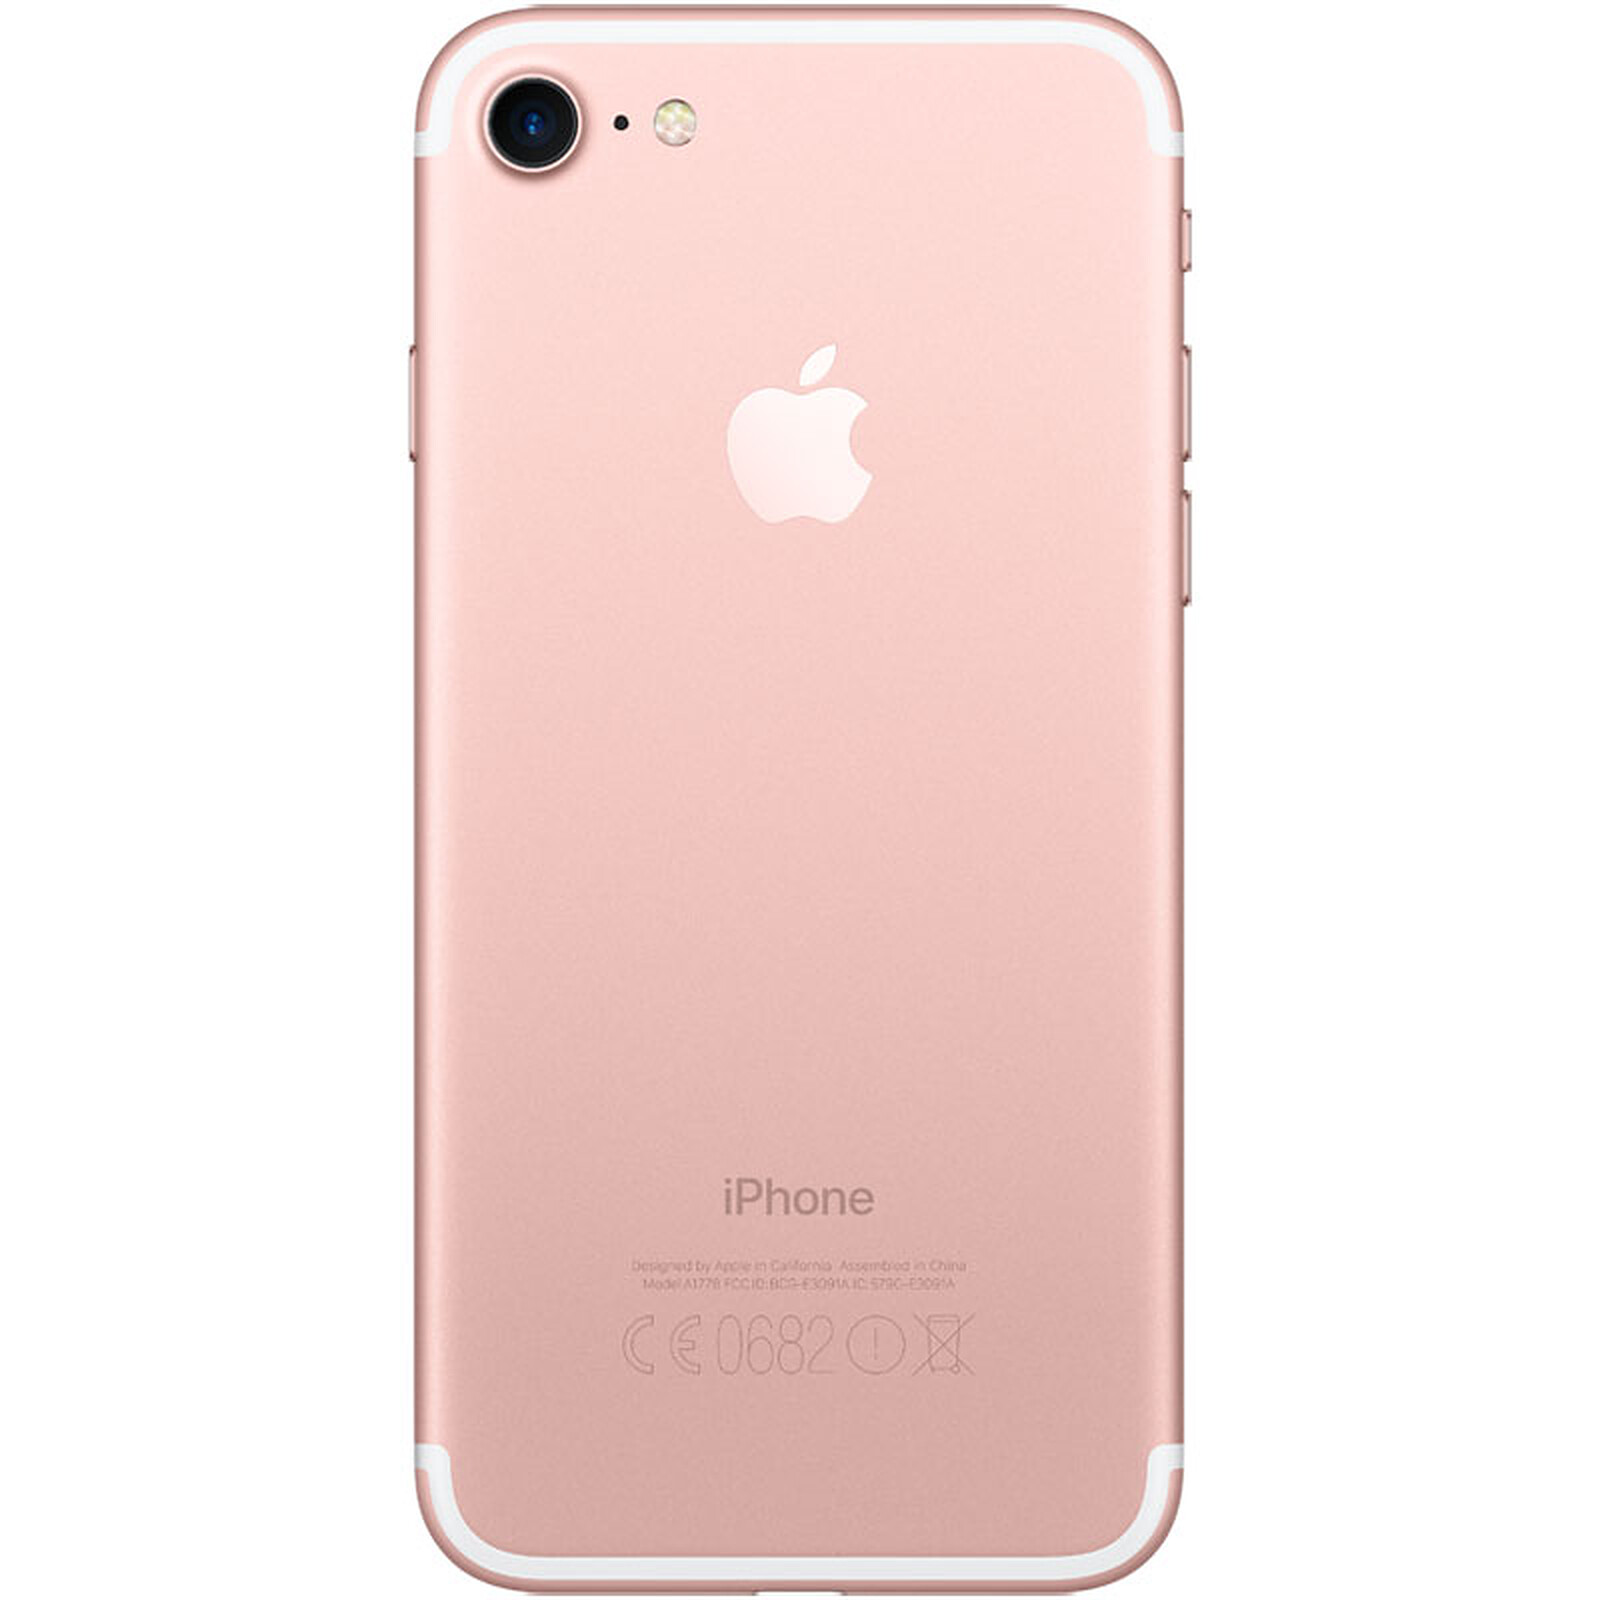 Apple iPhone 7 128 GB Oro Rosa - Móvil y smartphone - LDLC